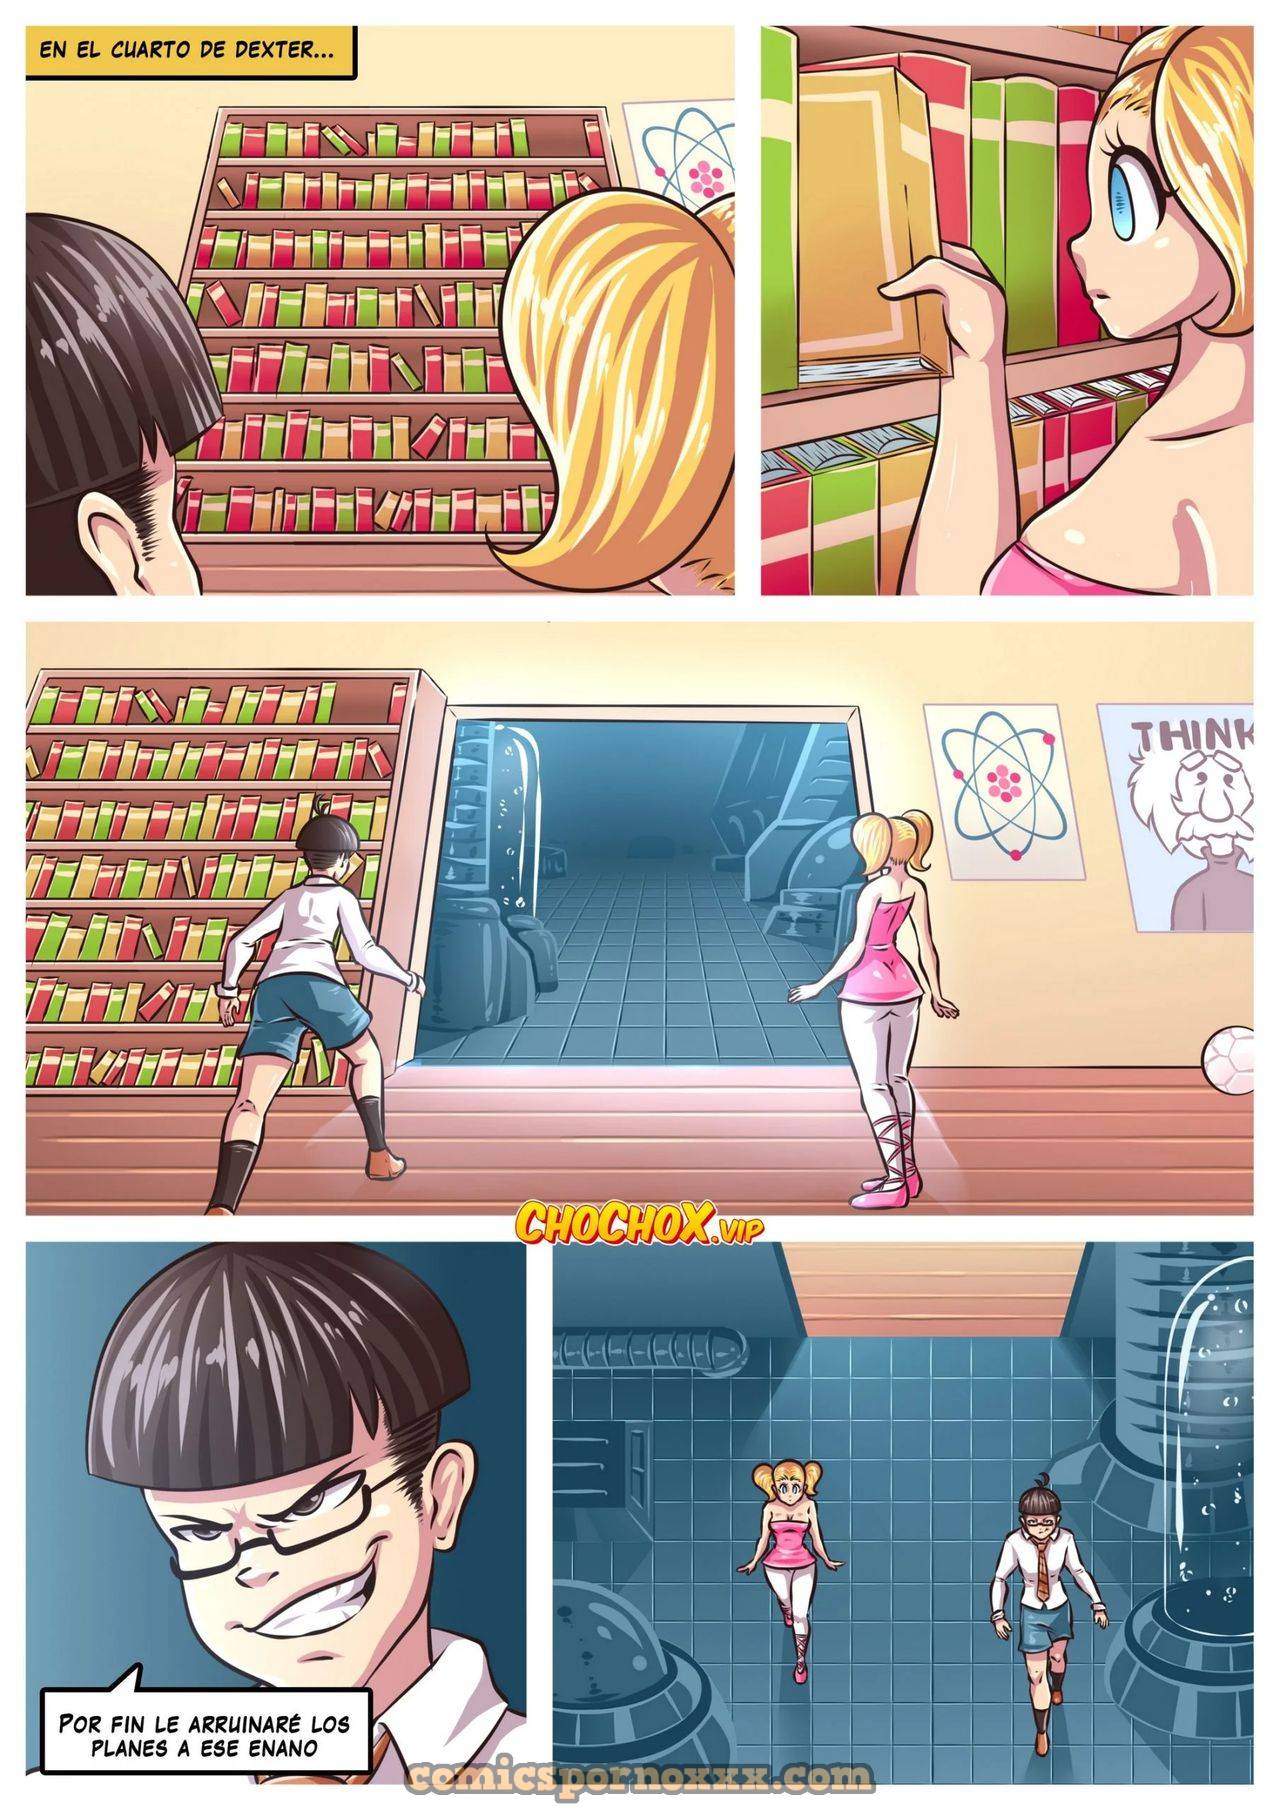 Entre Dimensiones - 7 - Comics Porno - Hentai Manga - Cartoon XXX